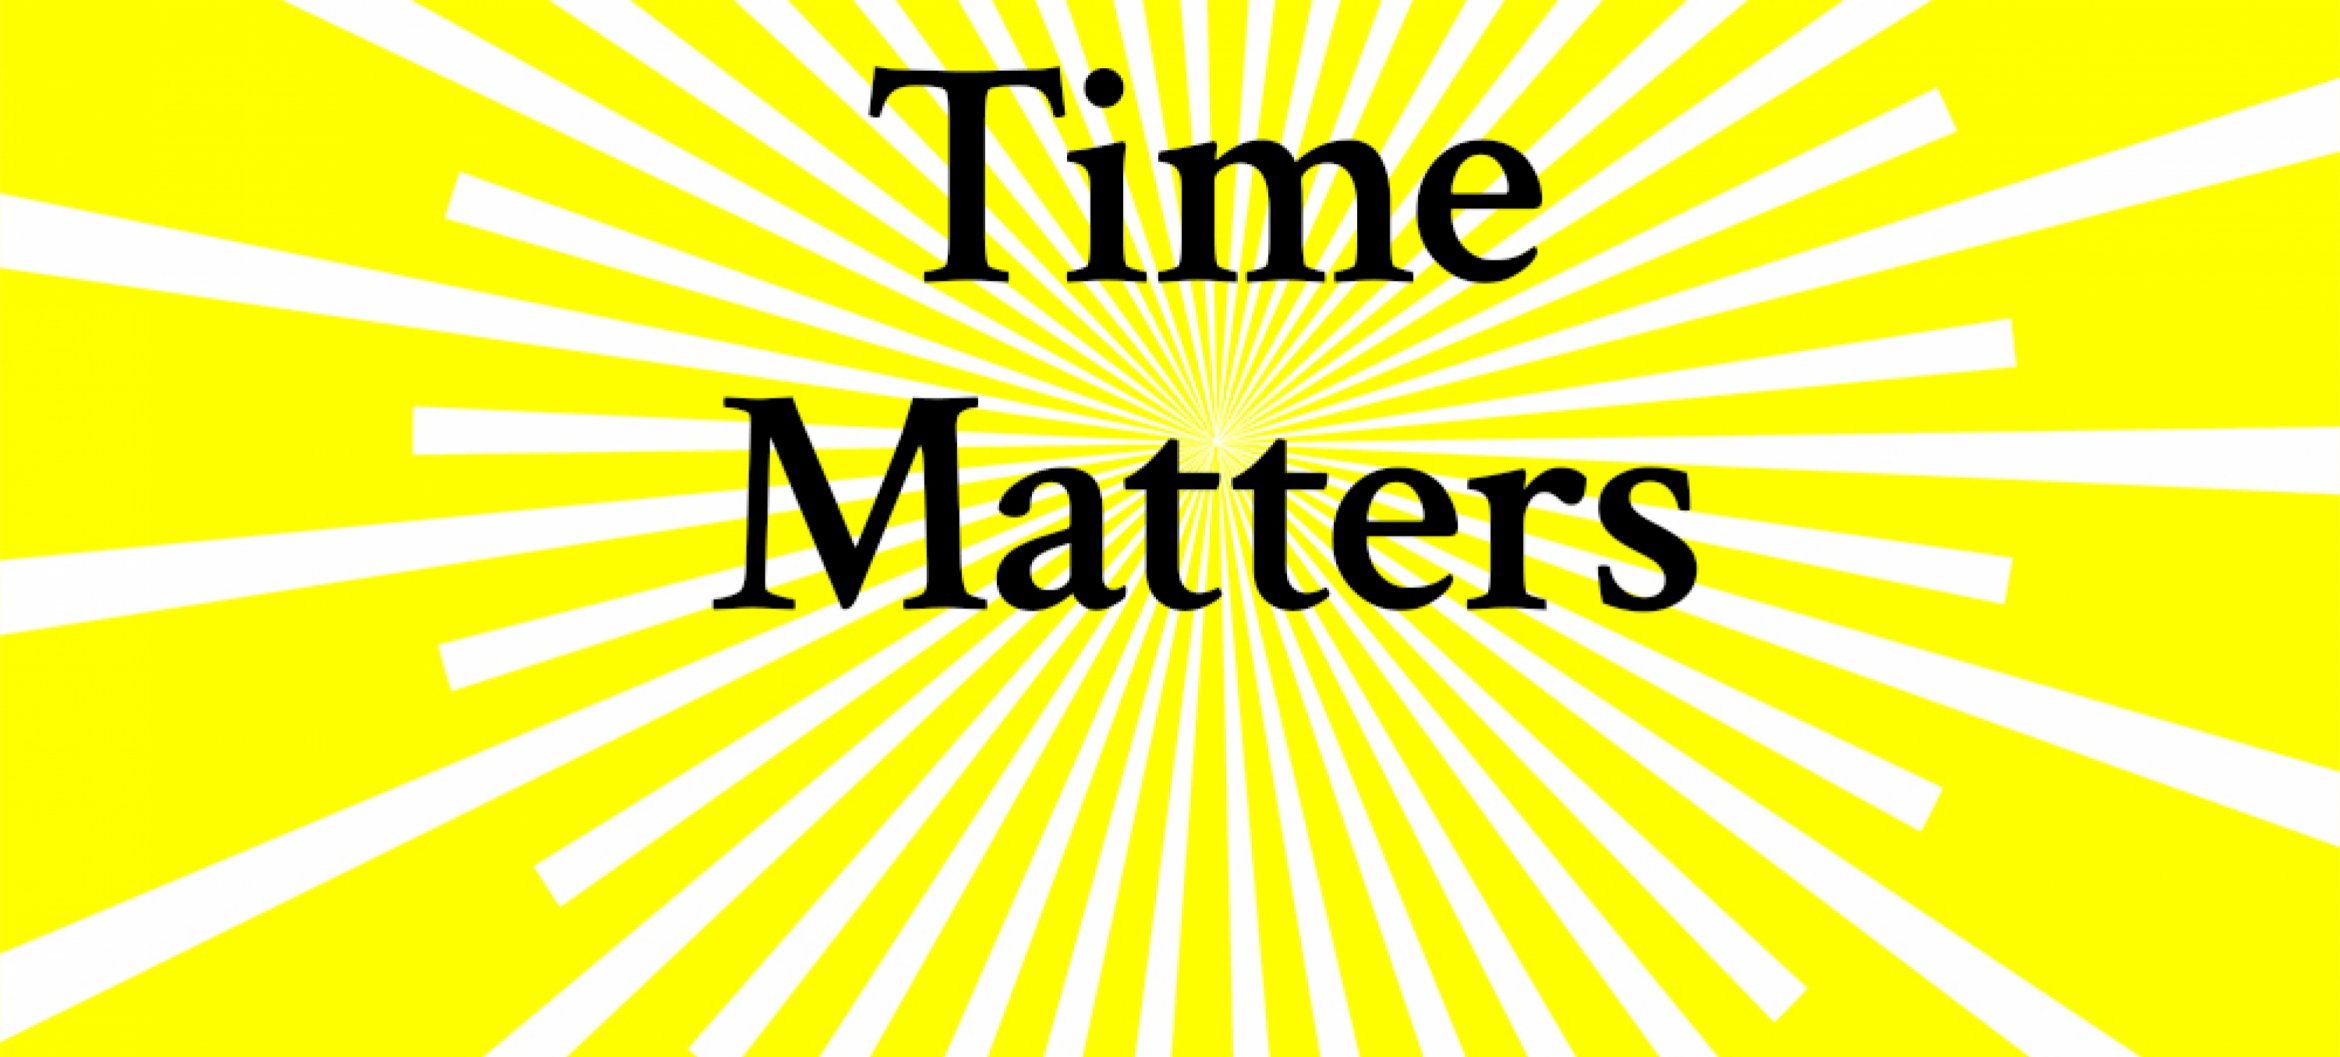 APRIA presents: Time Matters